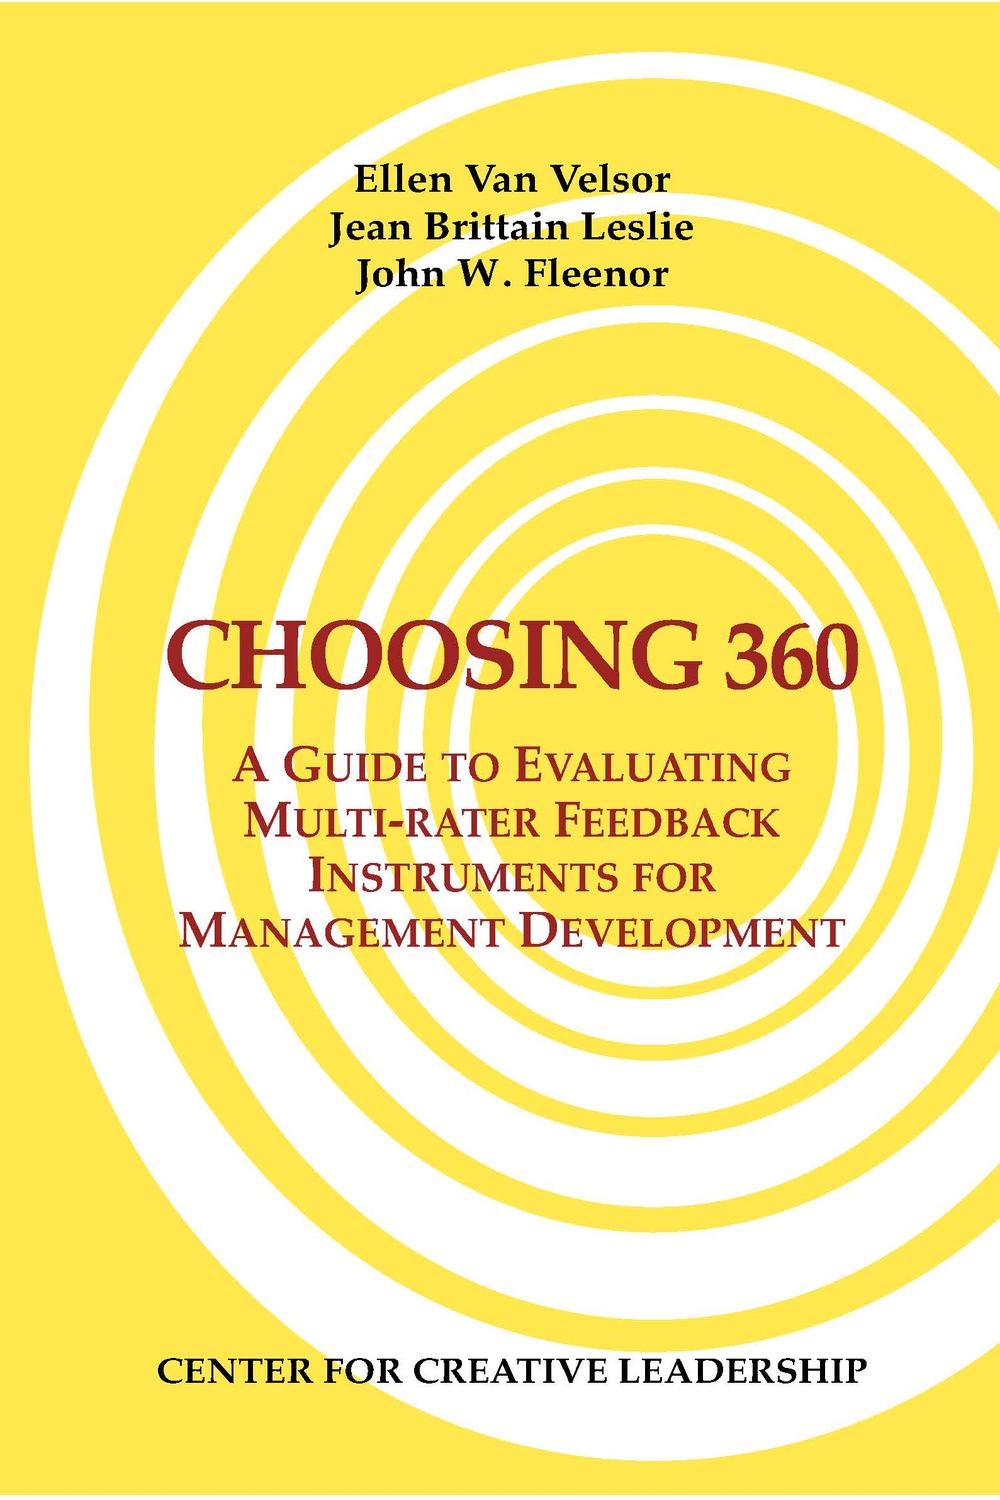 Choosing 360: A Guide to Evaluating Multi-Rater Feedback Instruments for Management Developmen - Van Velsor, Leslie, Fleenor